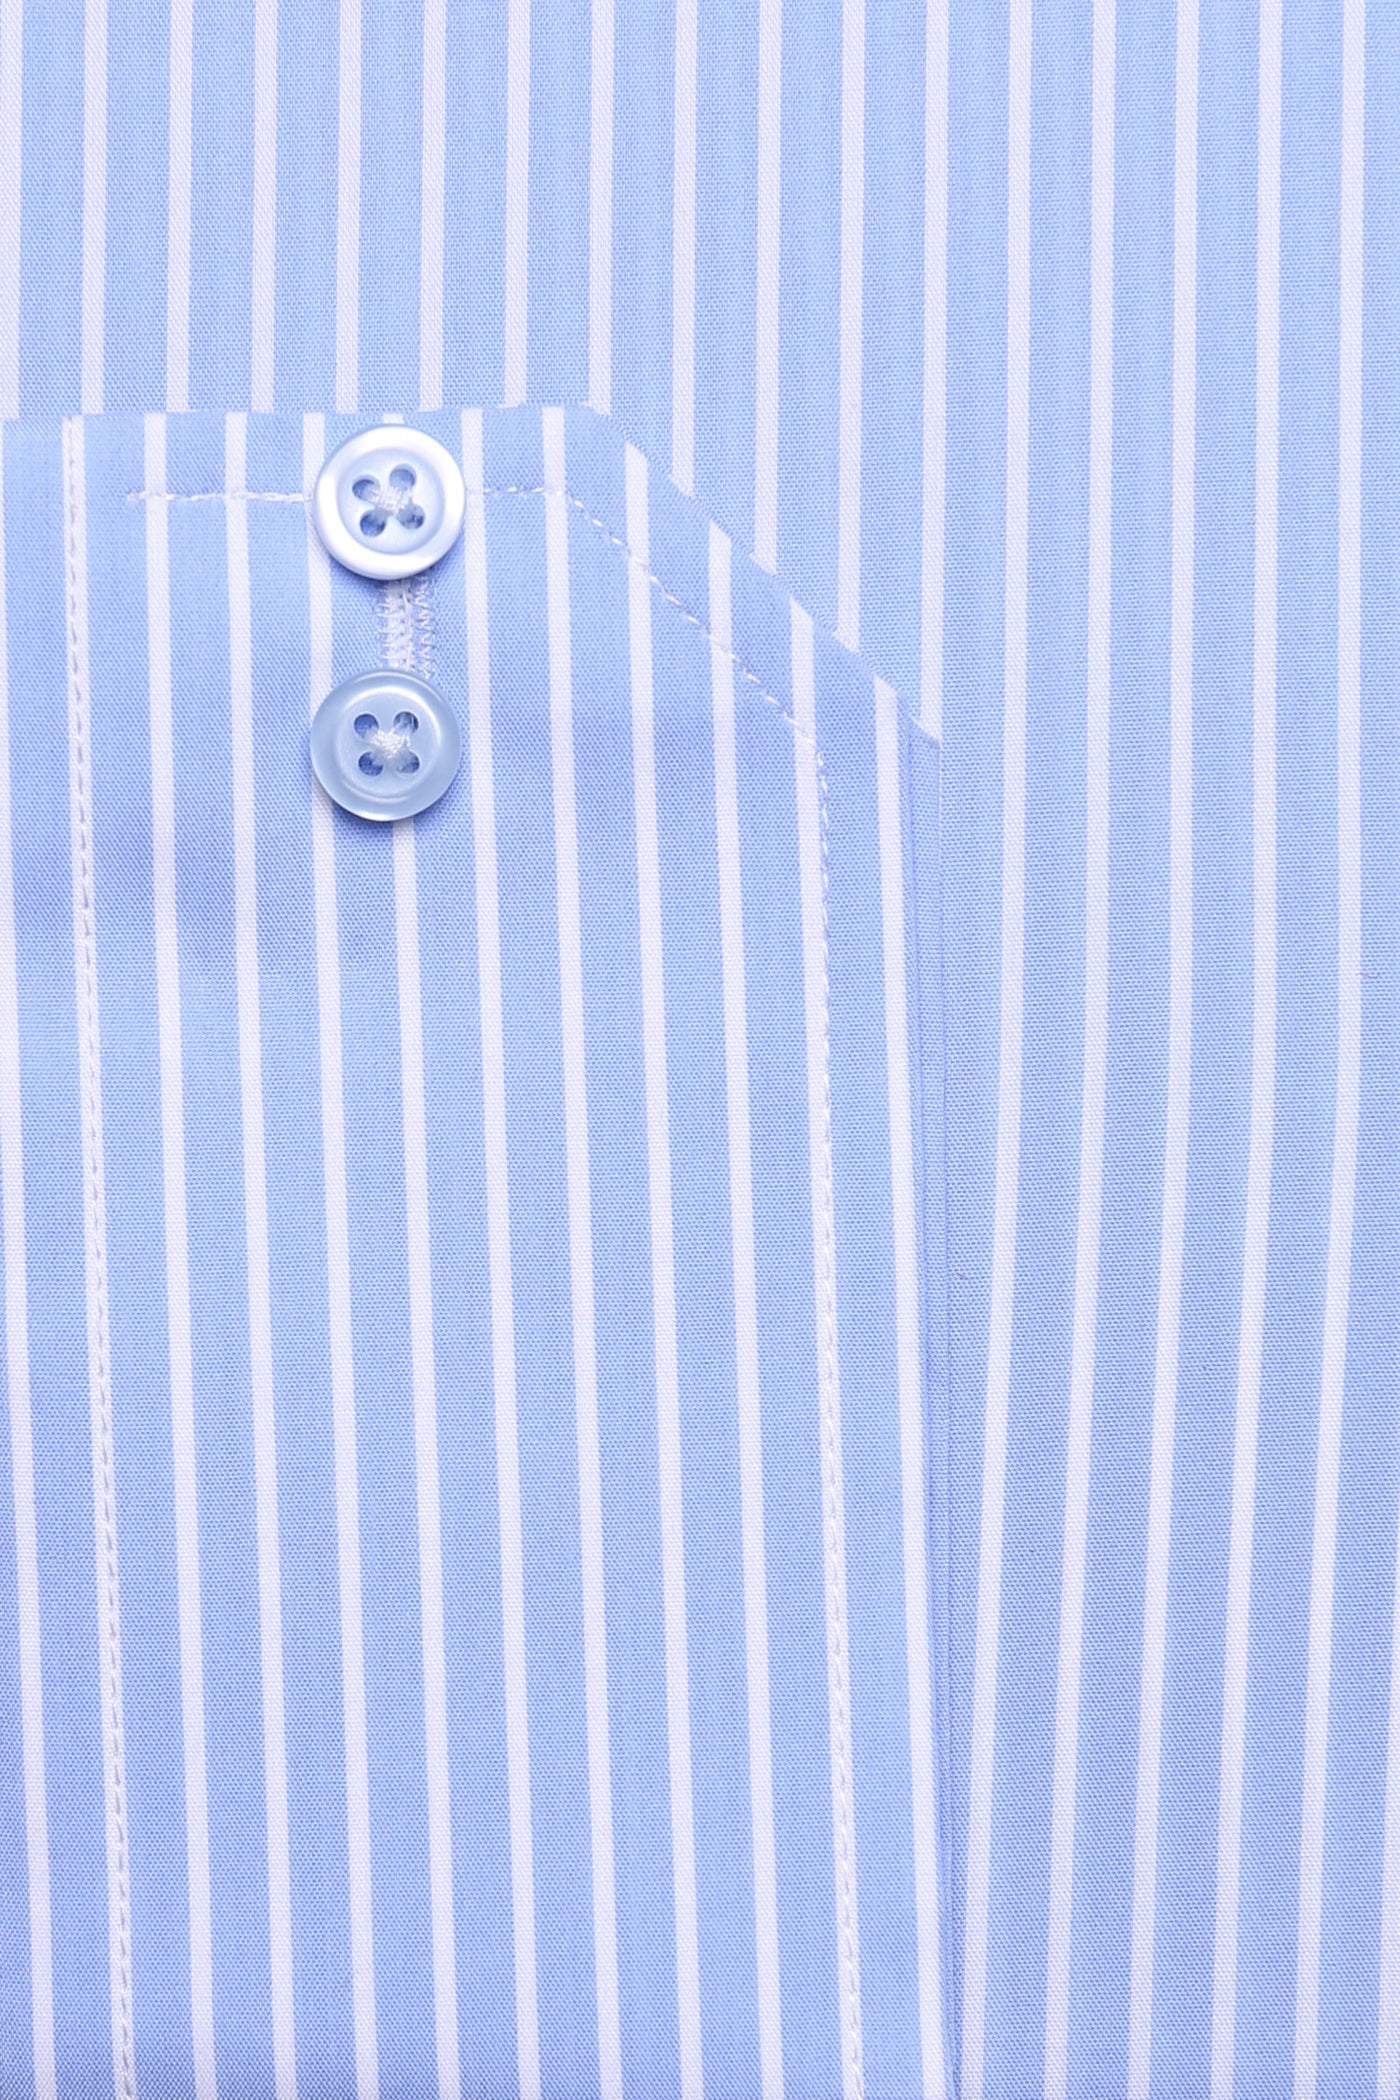 White Stripe Blue Formal Shirt